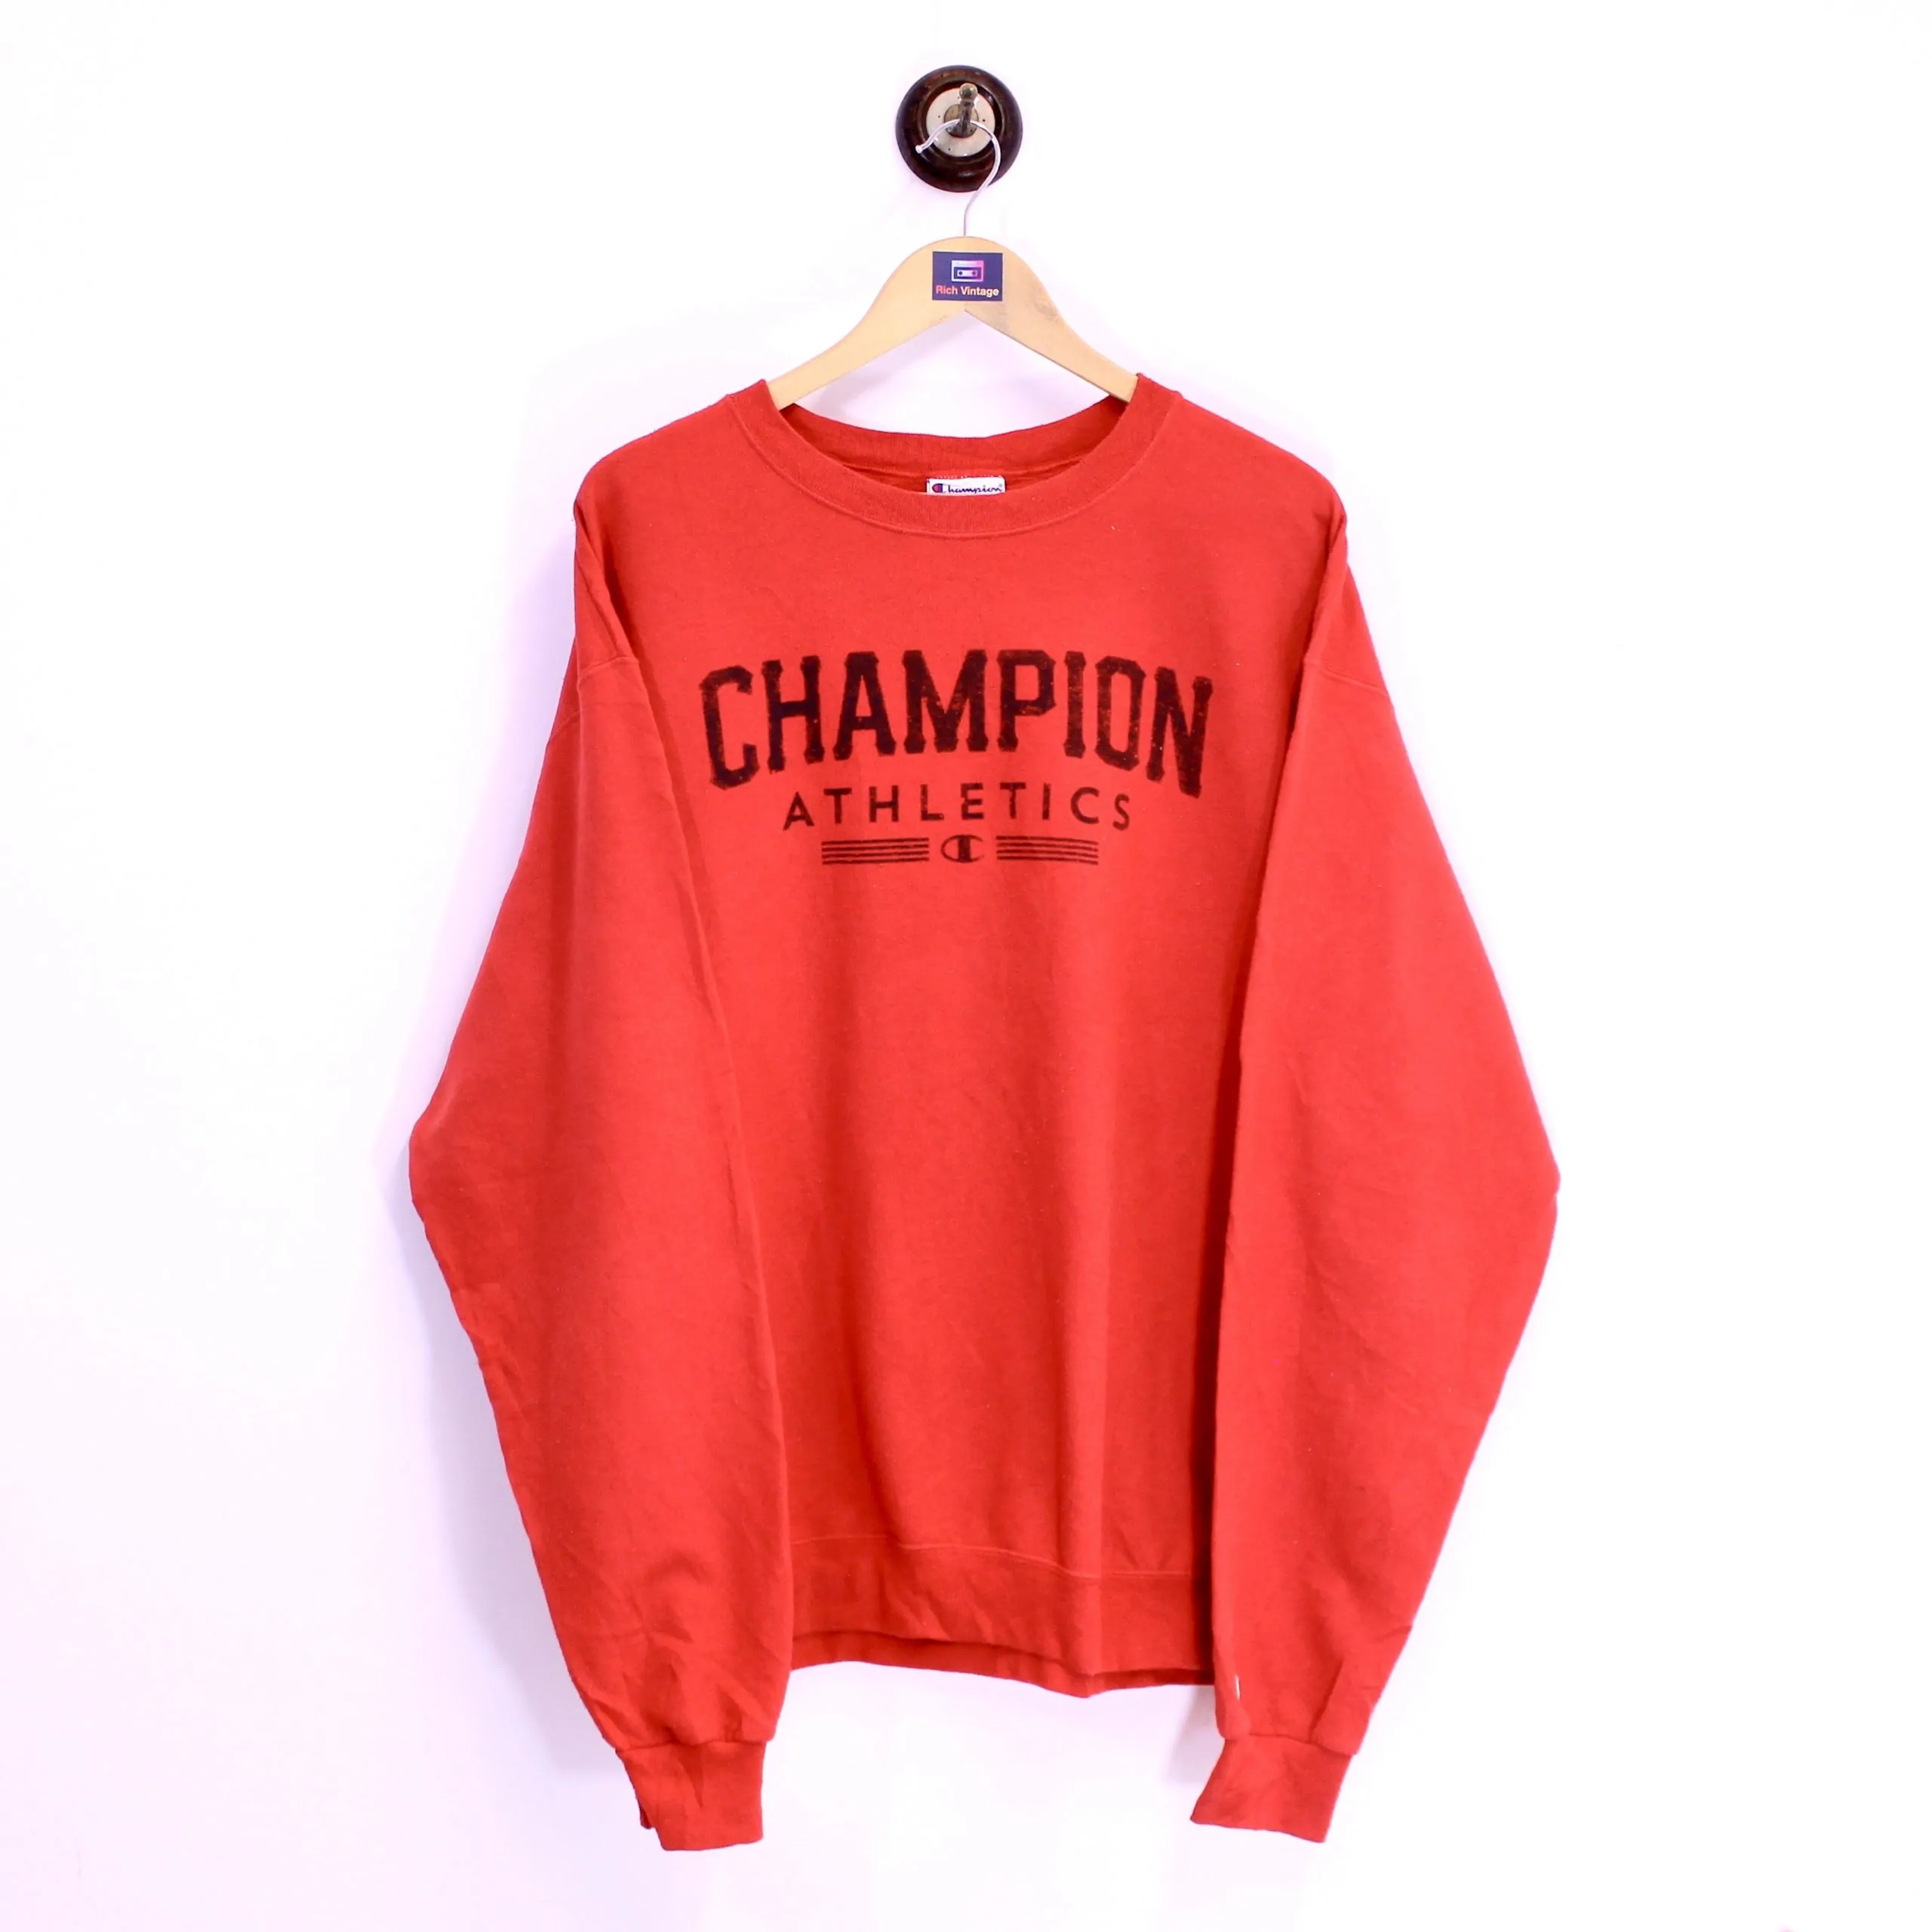 red champion sweater